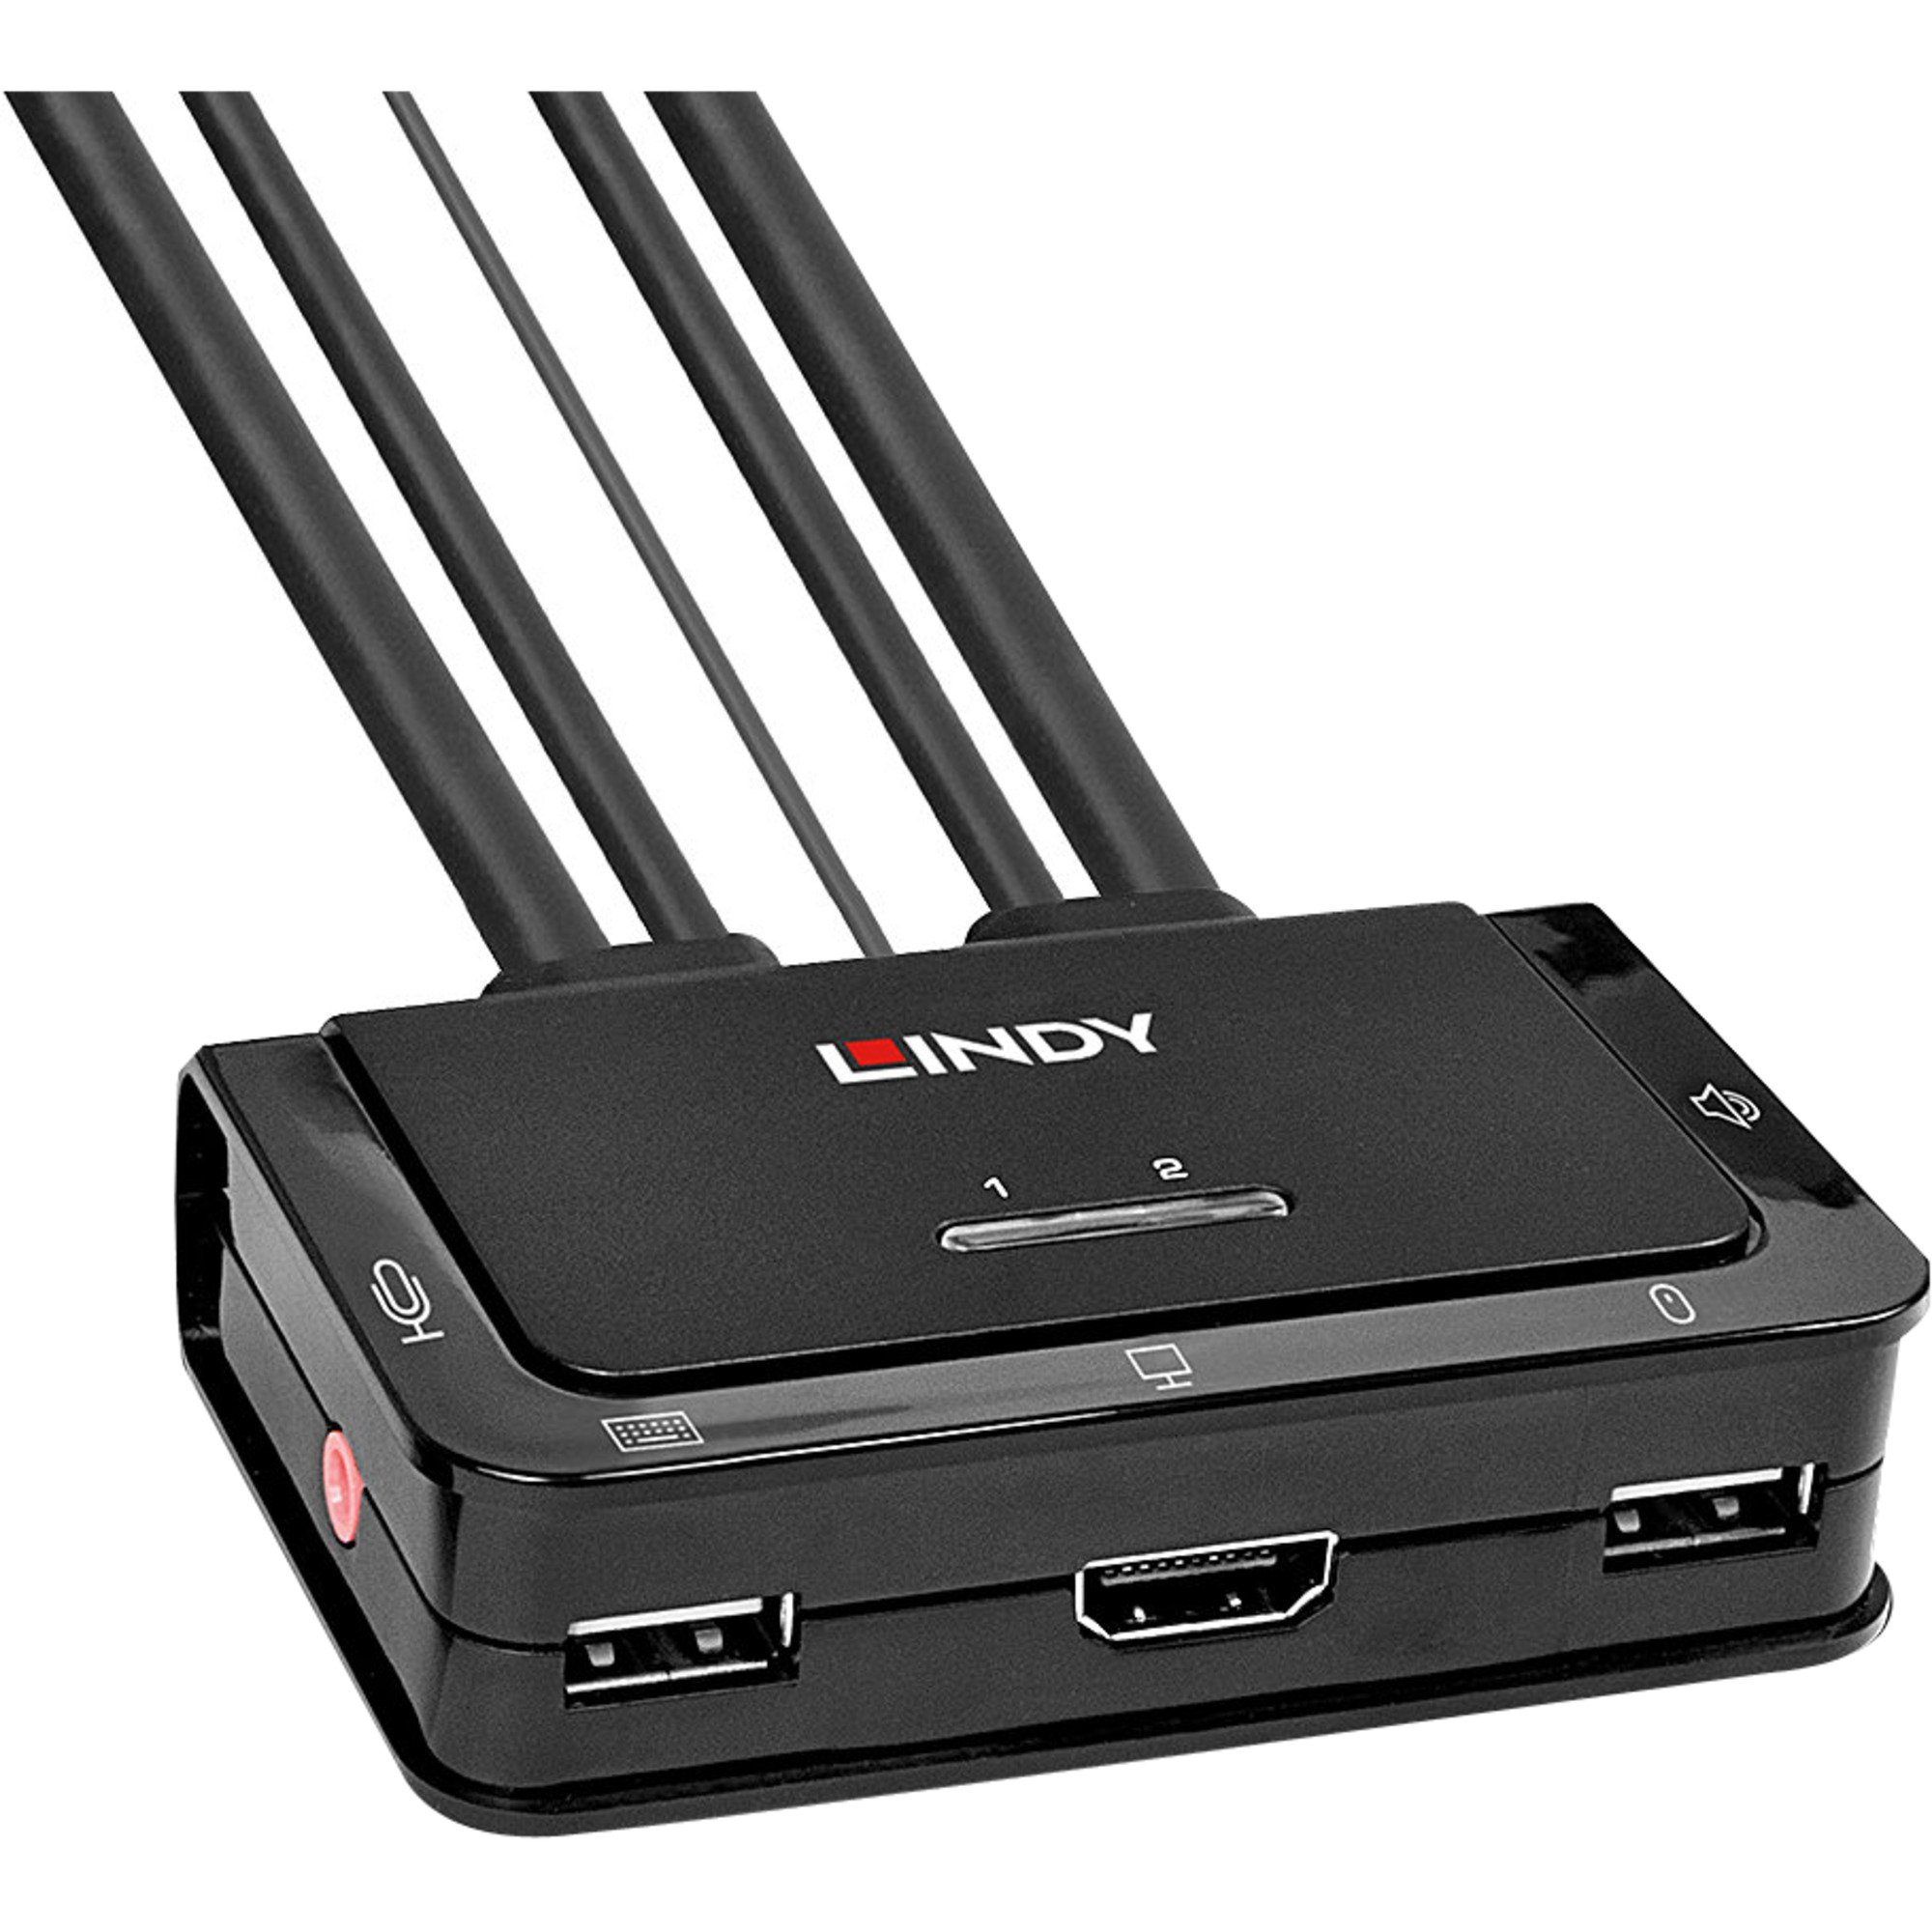 Lindy Lindy Kabel Netzwerk-Switch 2.0 4K60, USB KVM HDMI Switch, 2 Port